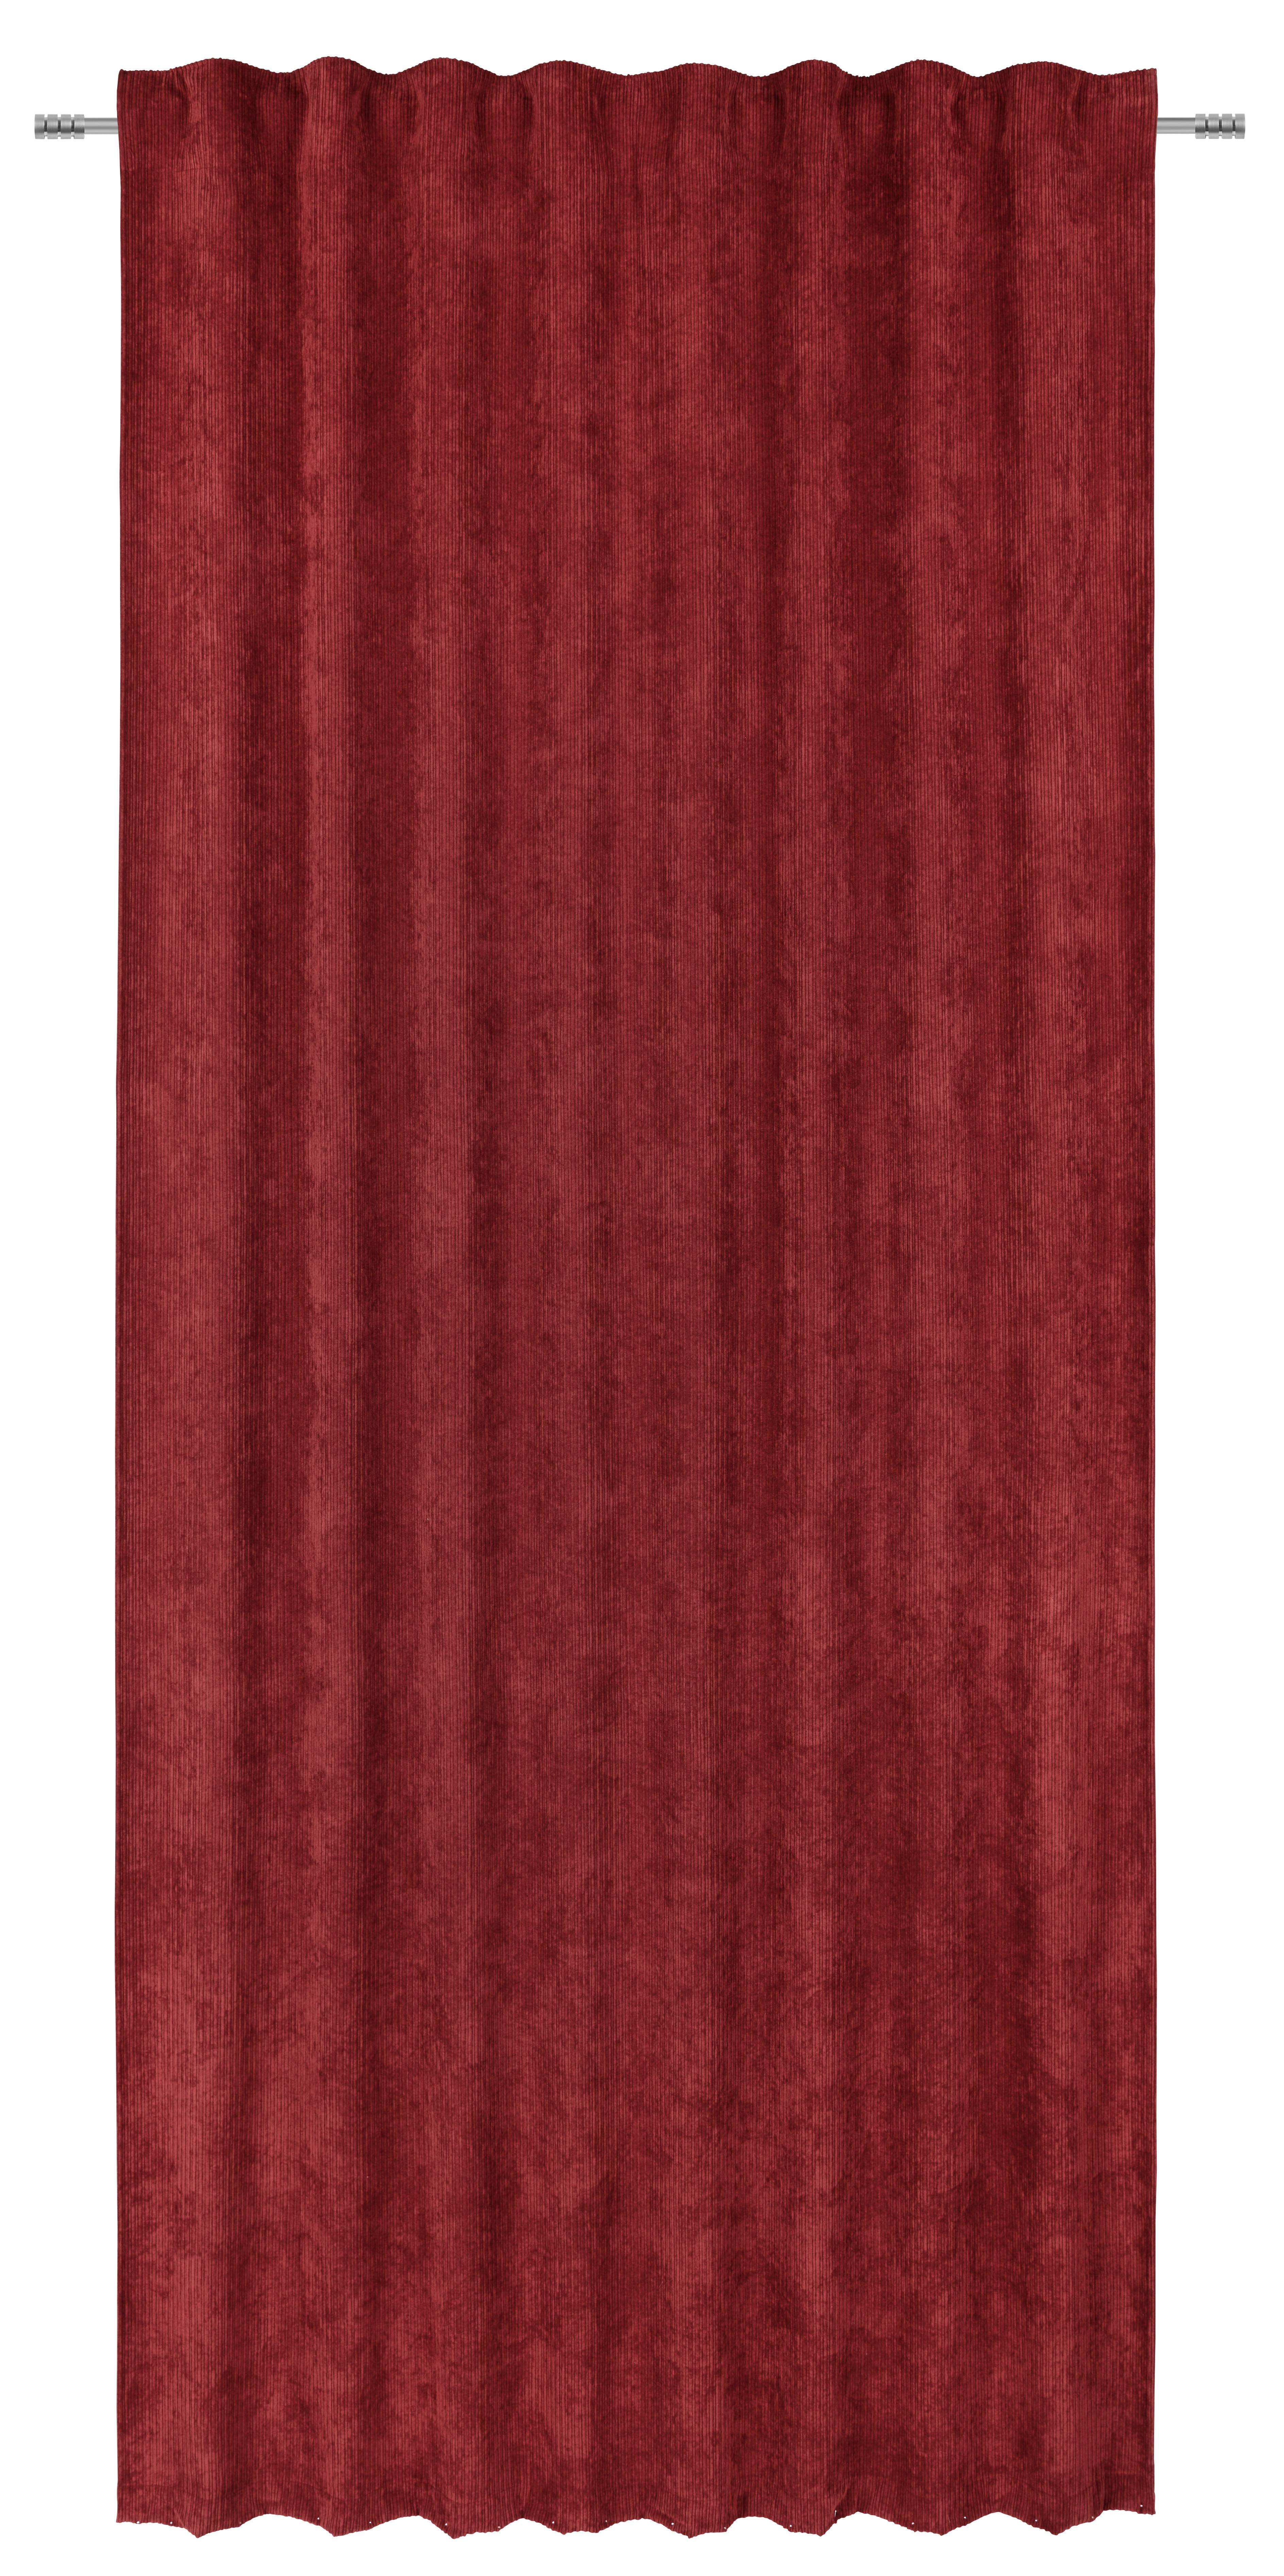 Končana Zavesa Corinna - bordo, Moderno, tekstil (135/245cm) - Premium Living